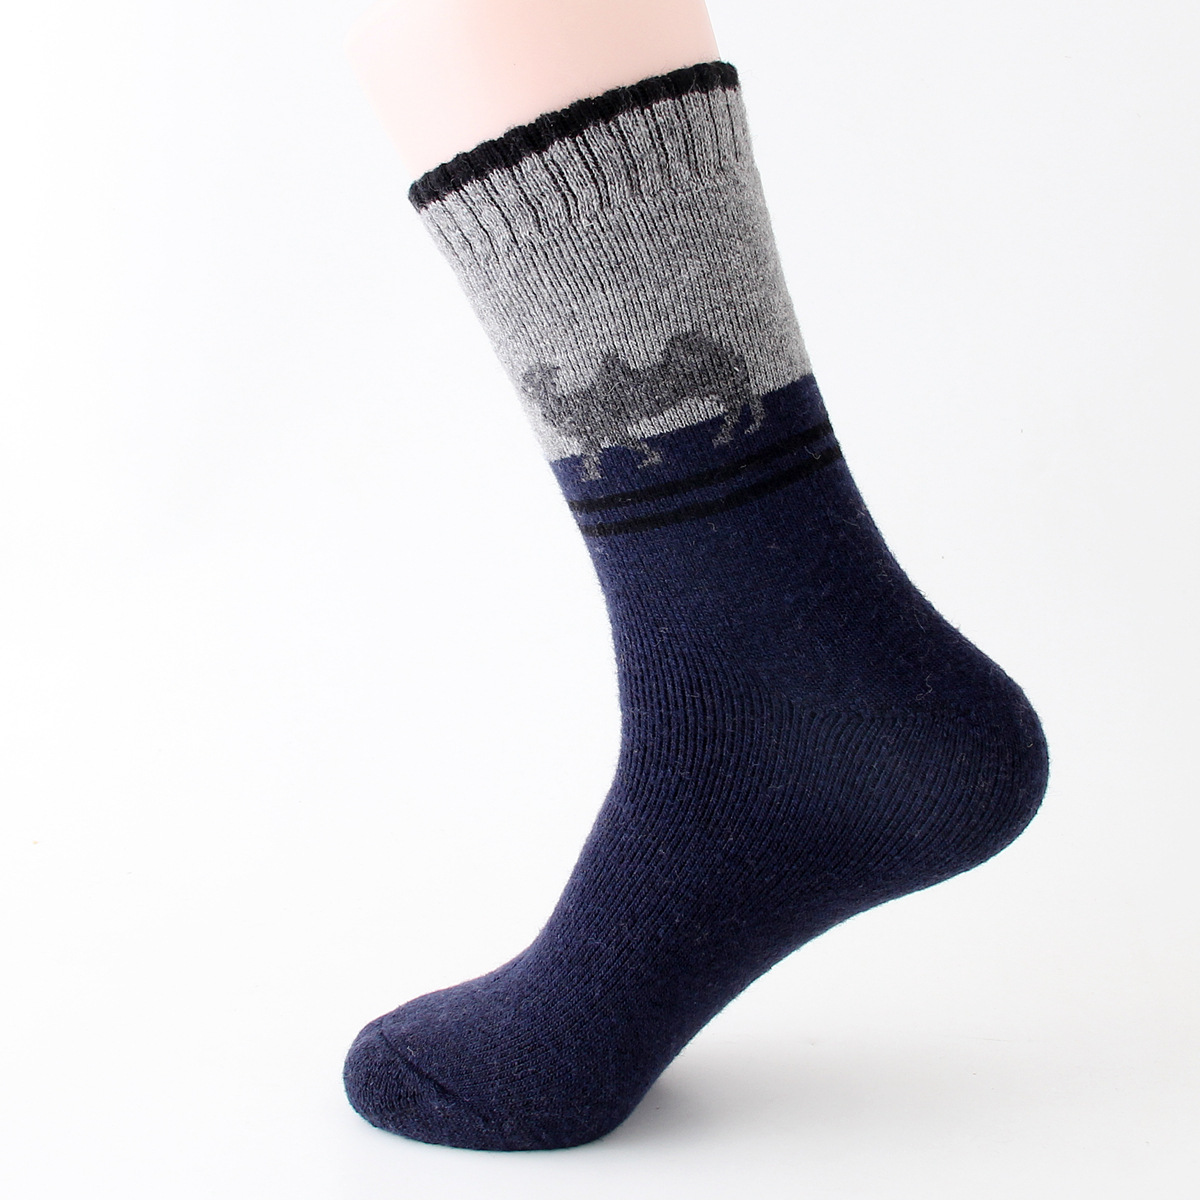 12 Pairs Thick Wool Socks Warm Winter Socks Argyle Camel Dress Socks Bulk Wholesale